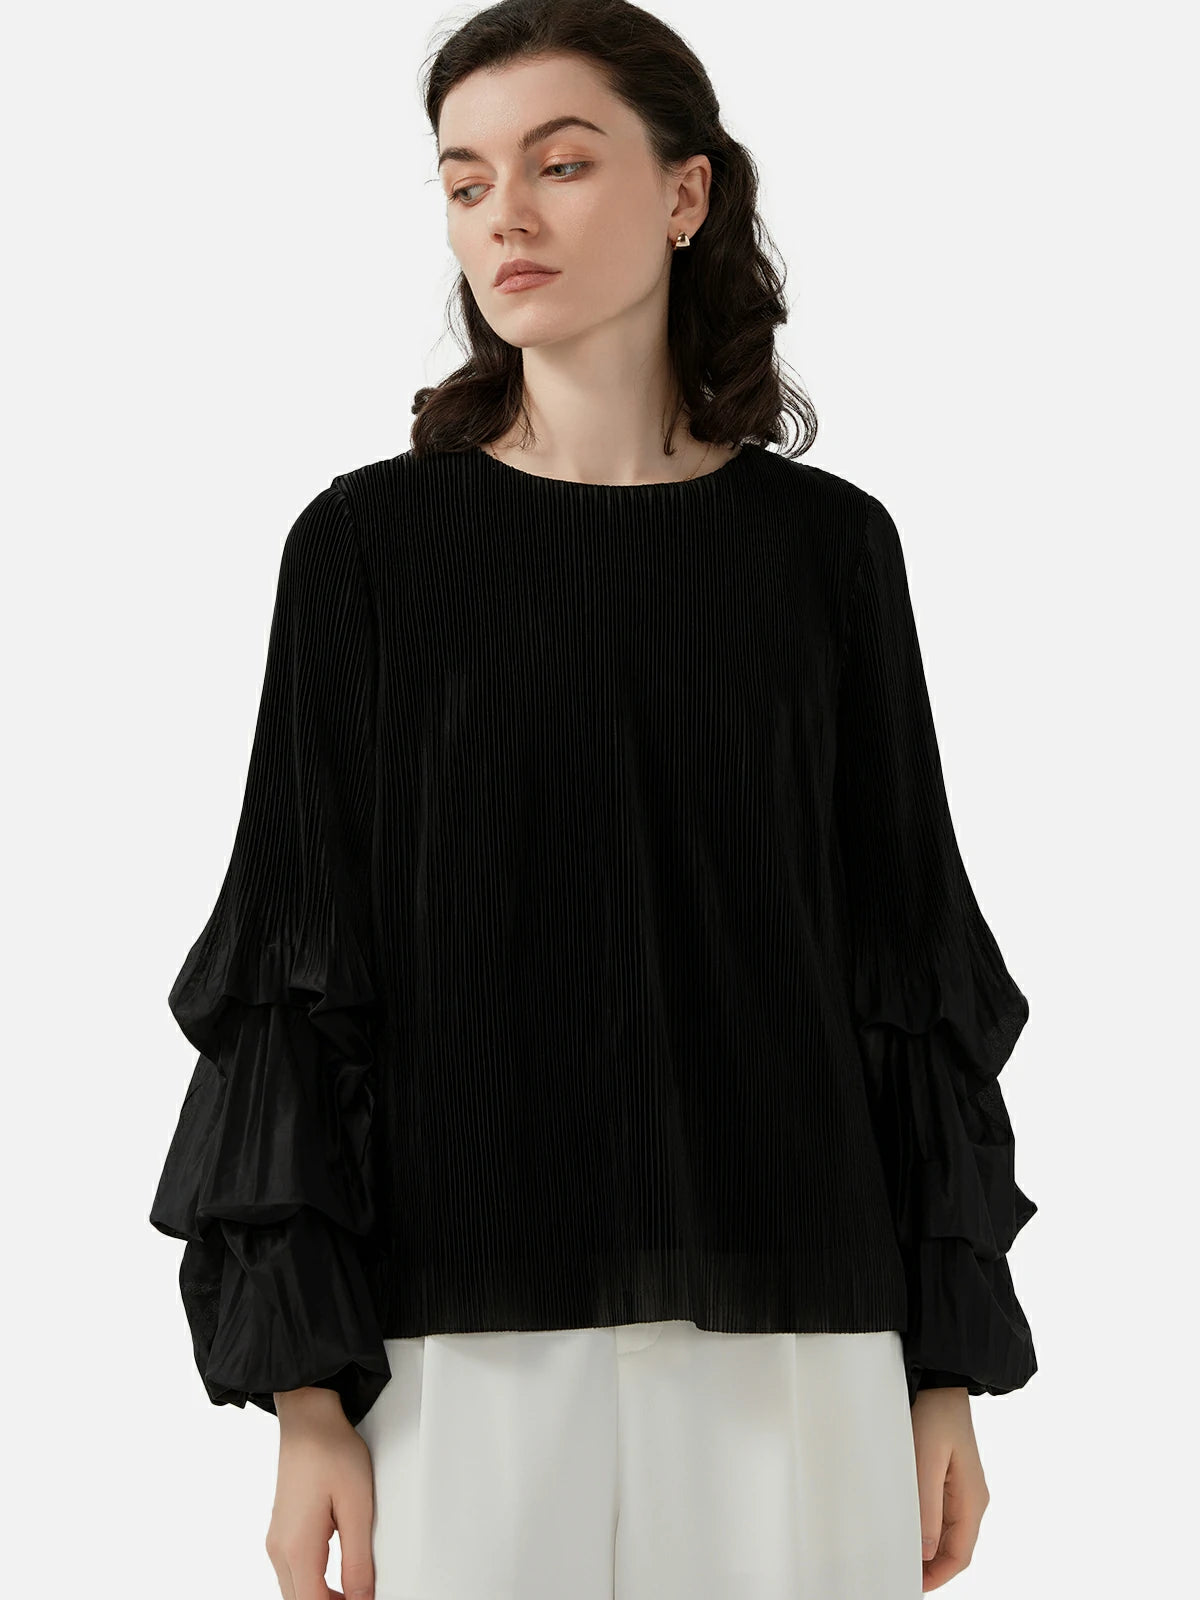  lantern-sleeve blouse